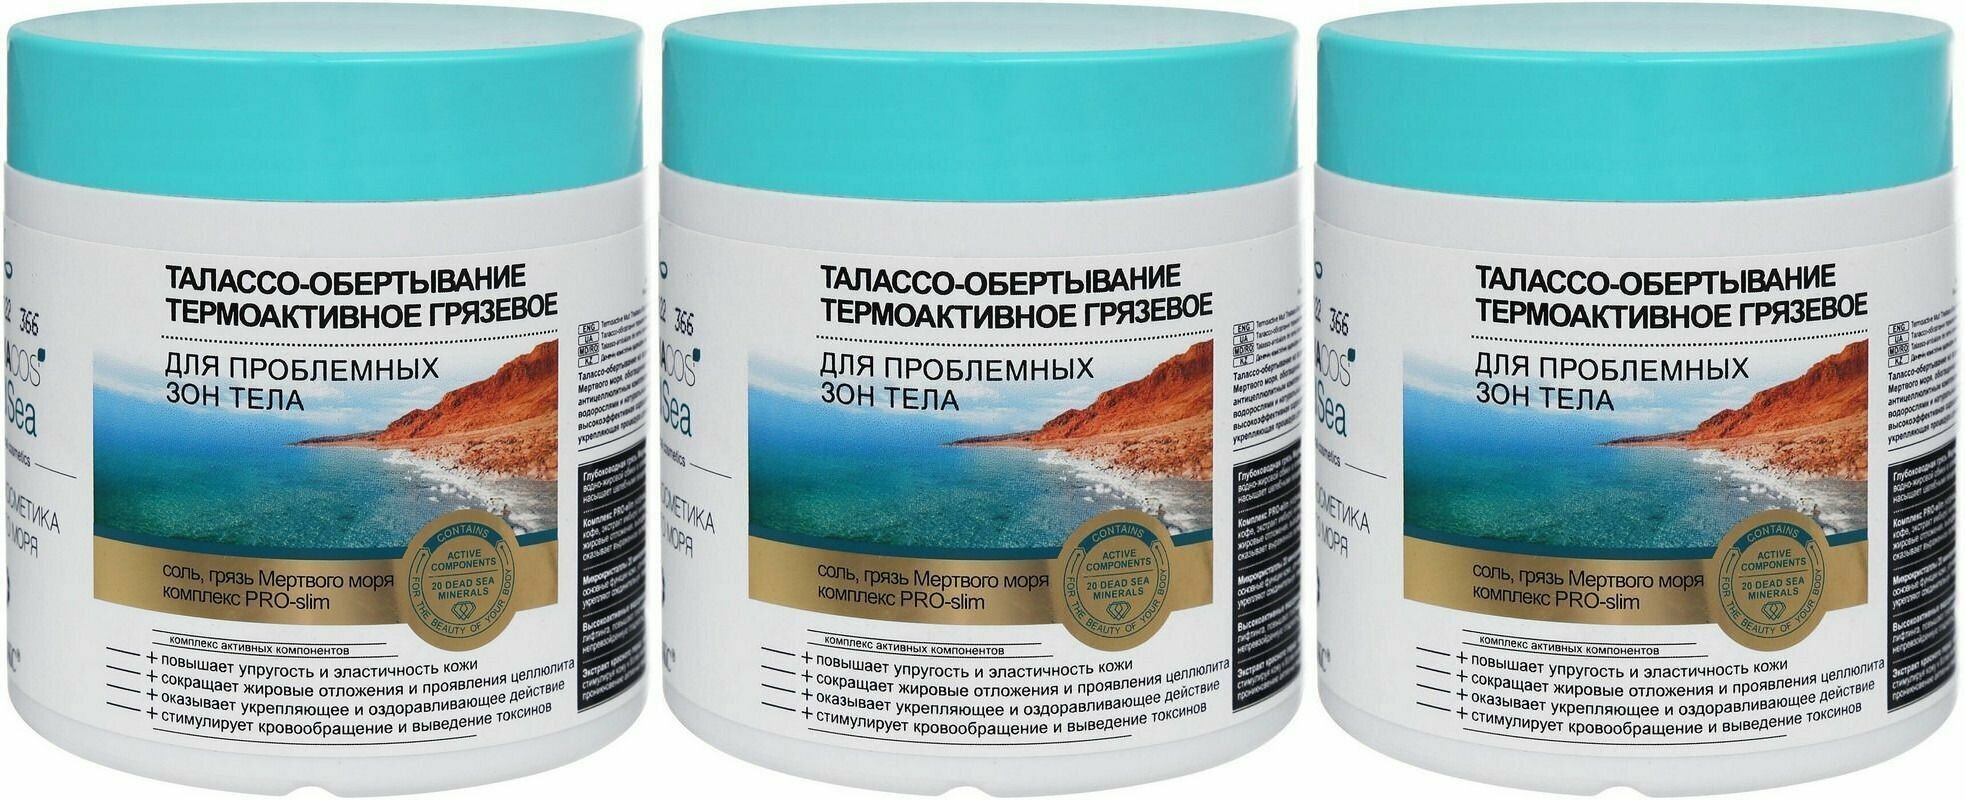 Витэкс Талассо-обертывание грязевое Pharmacos Dead Sea, термоактивное, для проблемных зон тела, 400 мл, 3шт